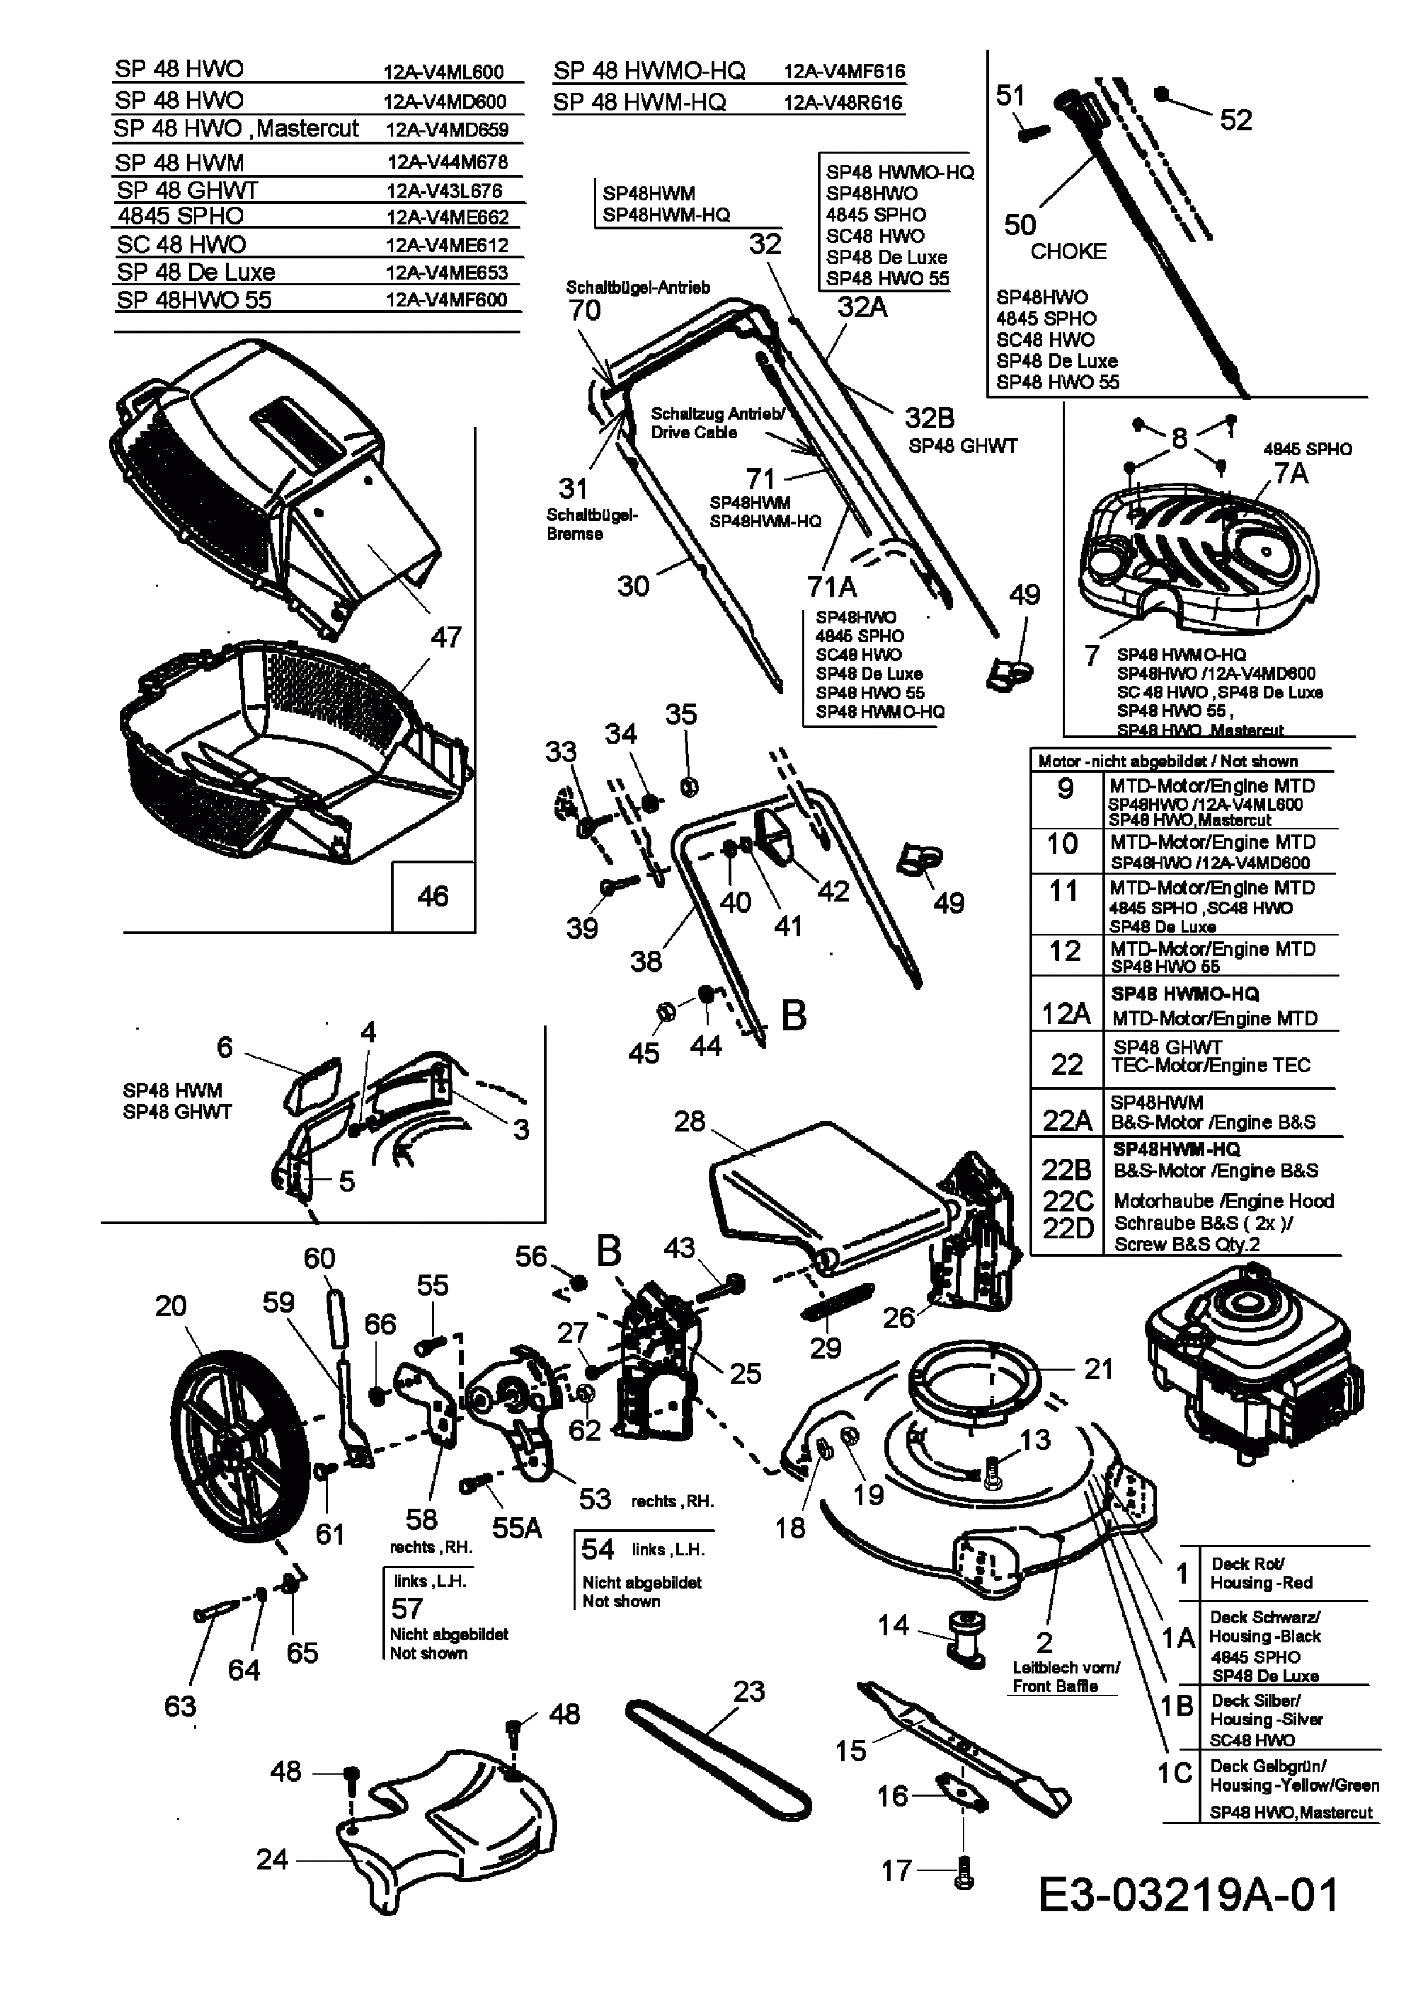 MTD Артикул 12A-V4MF600 (год выпуска 2007). Основная деталировка